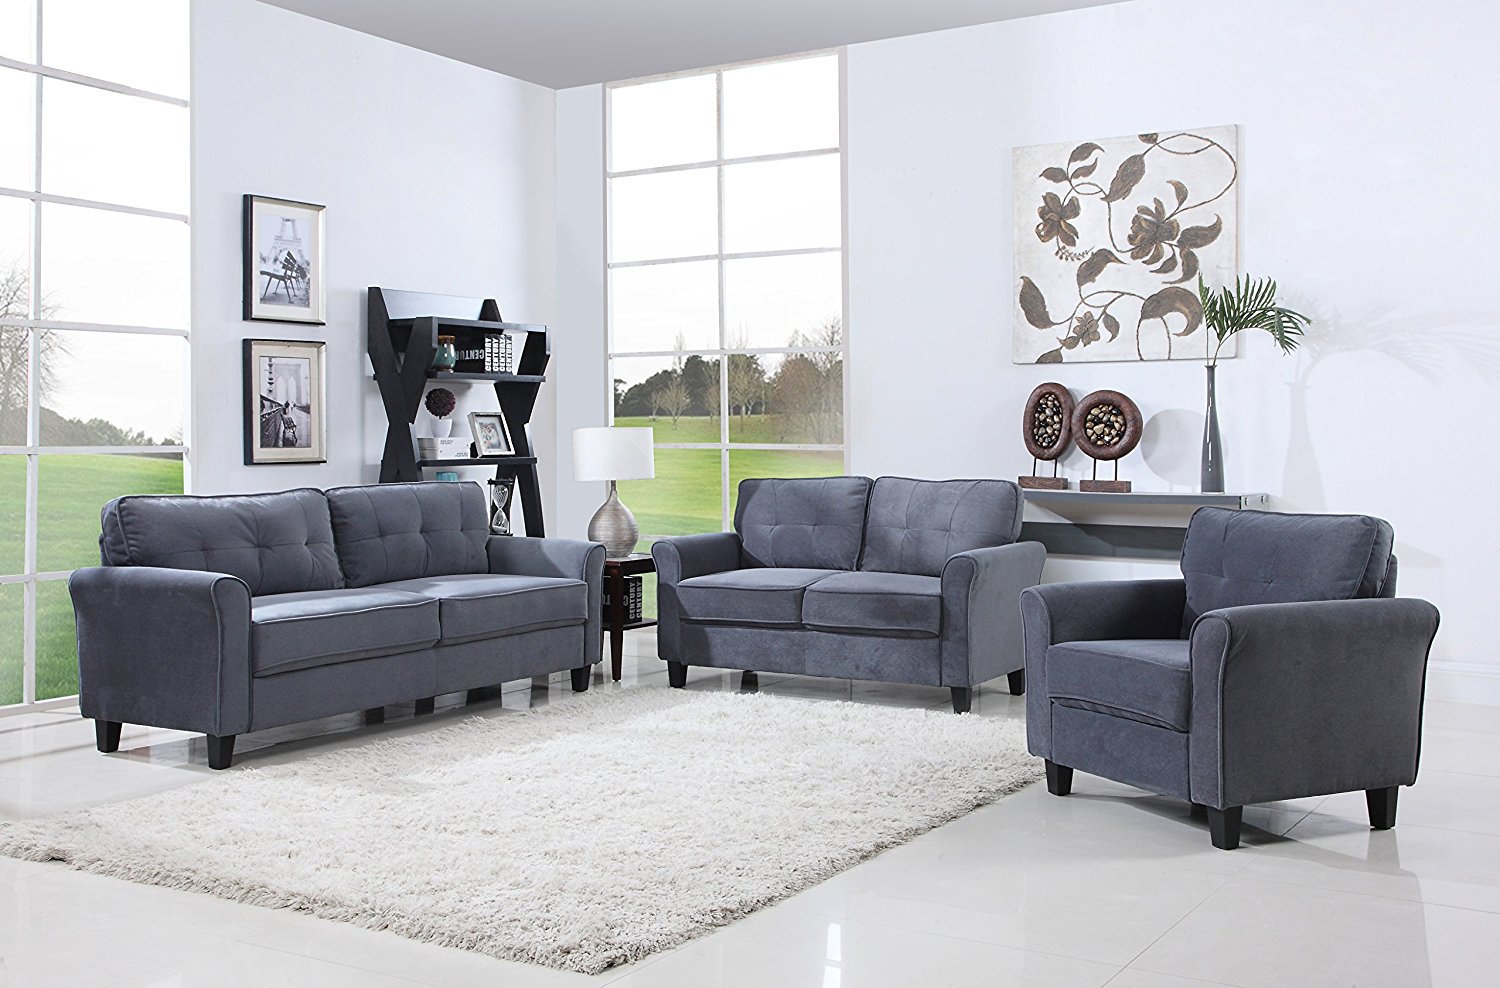 Classic Living Room Furniture Set - Sofa, Love Seat, Accent Chair (Dark Grey)